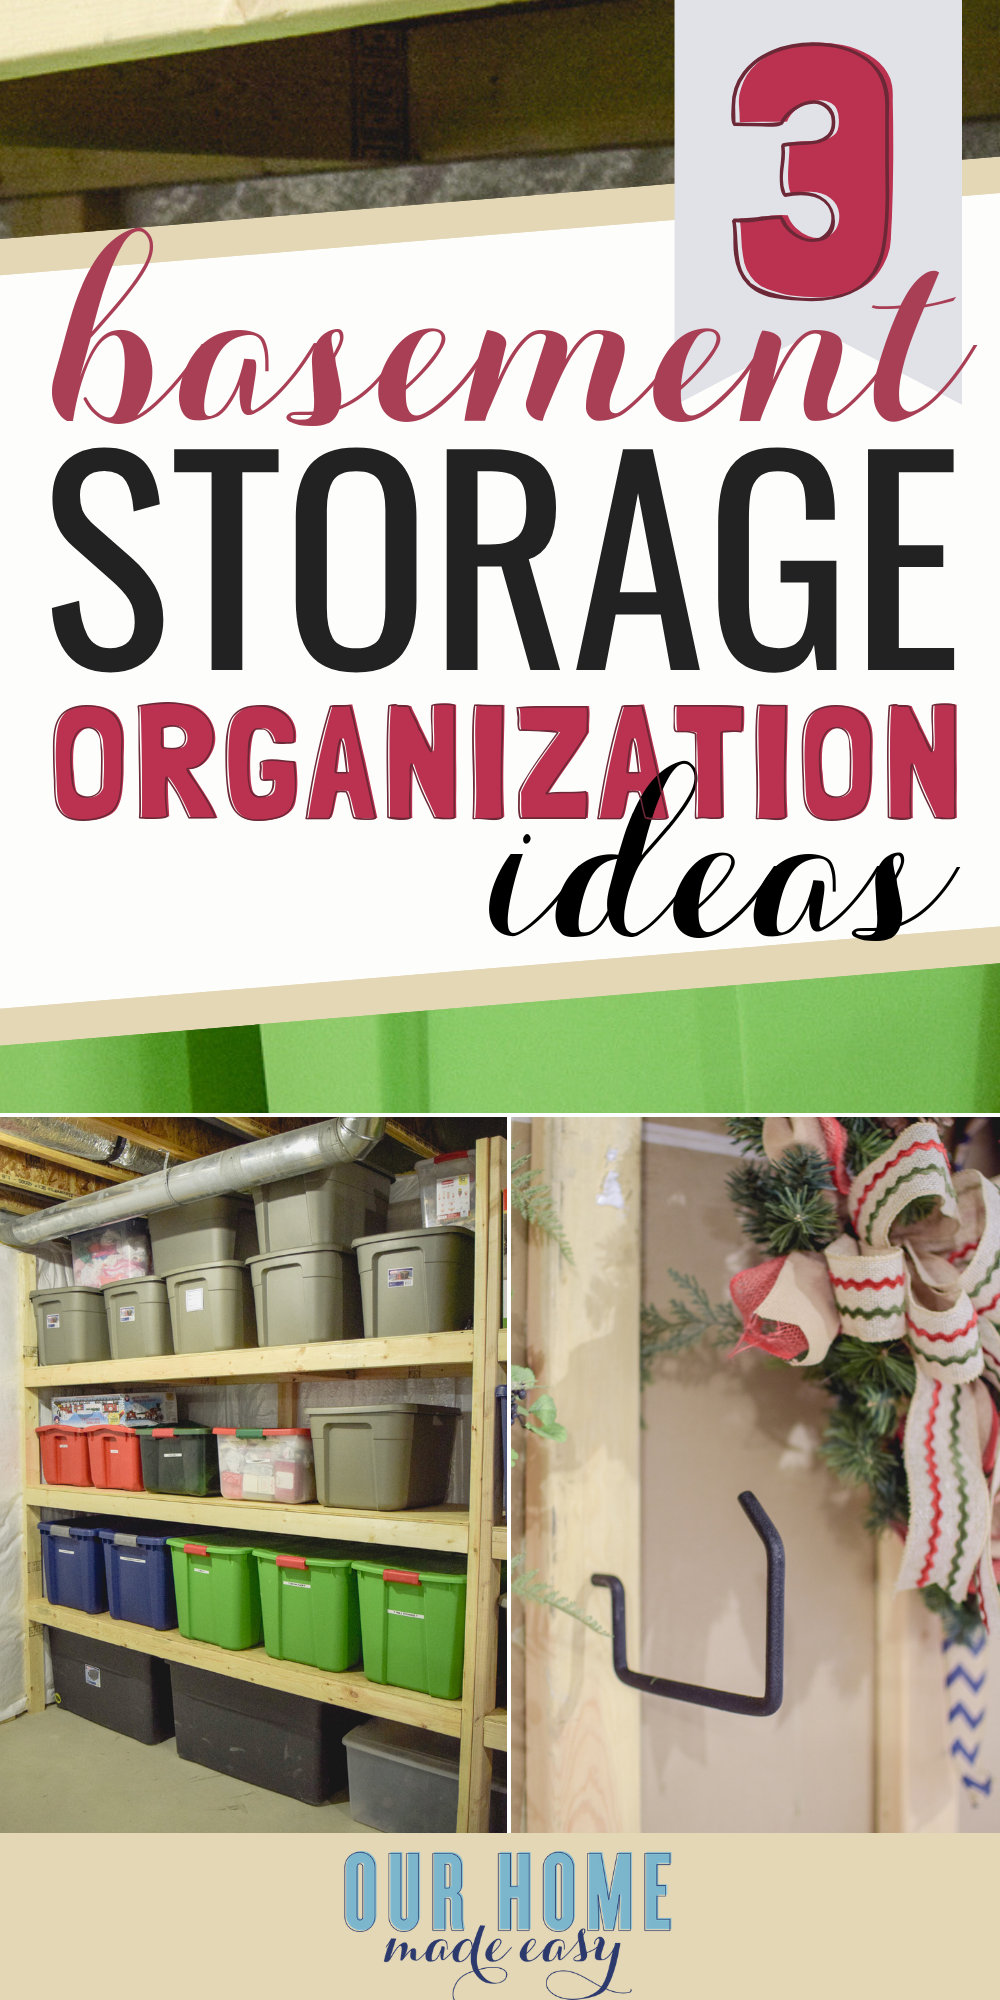 50 Creative Basement Storage Ideas for Maximum Organization